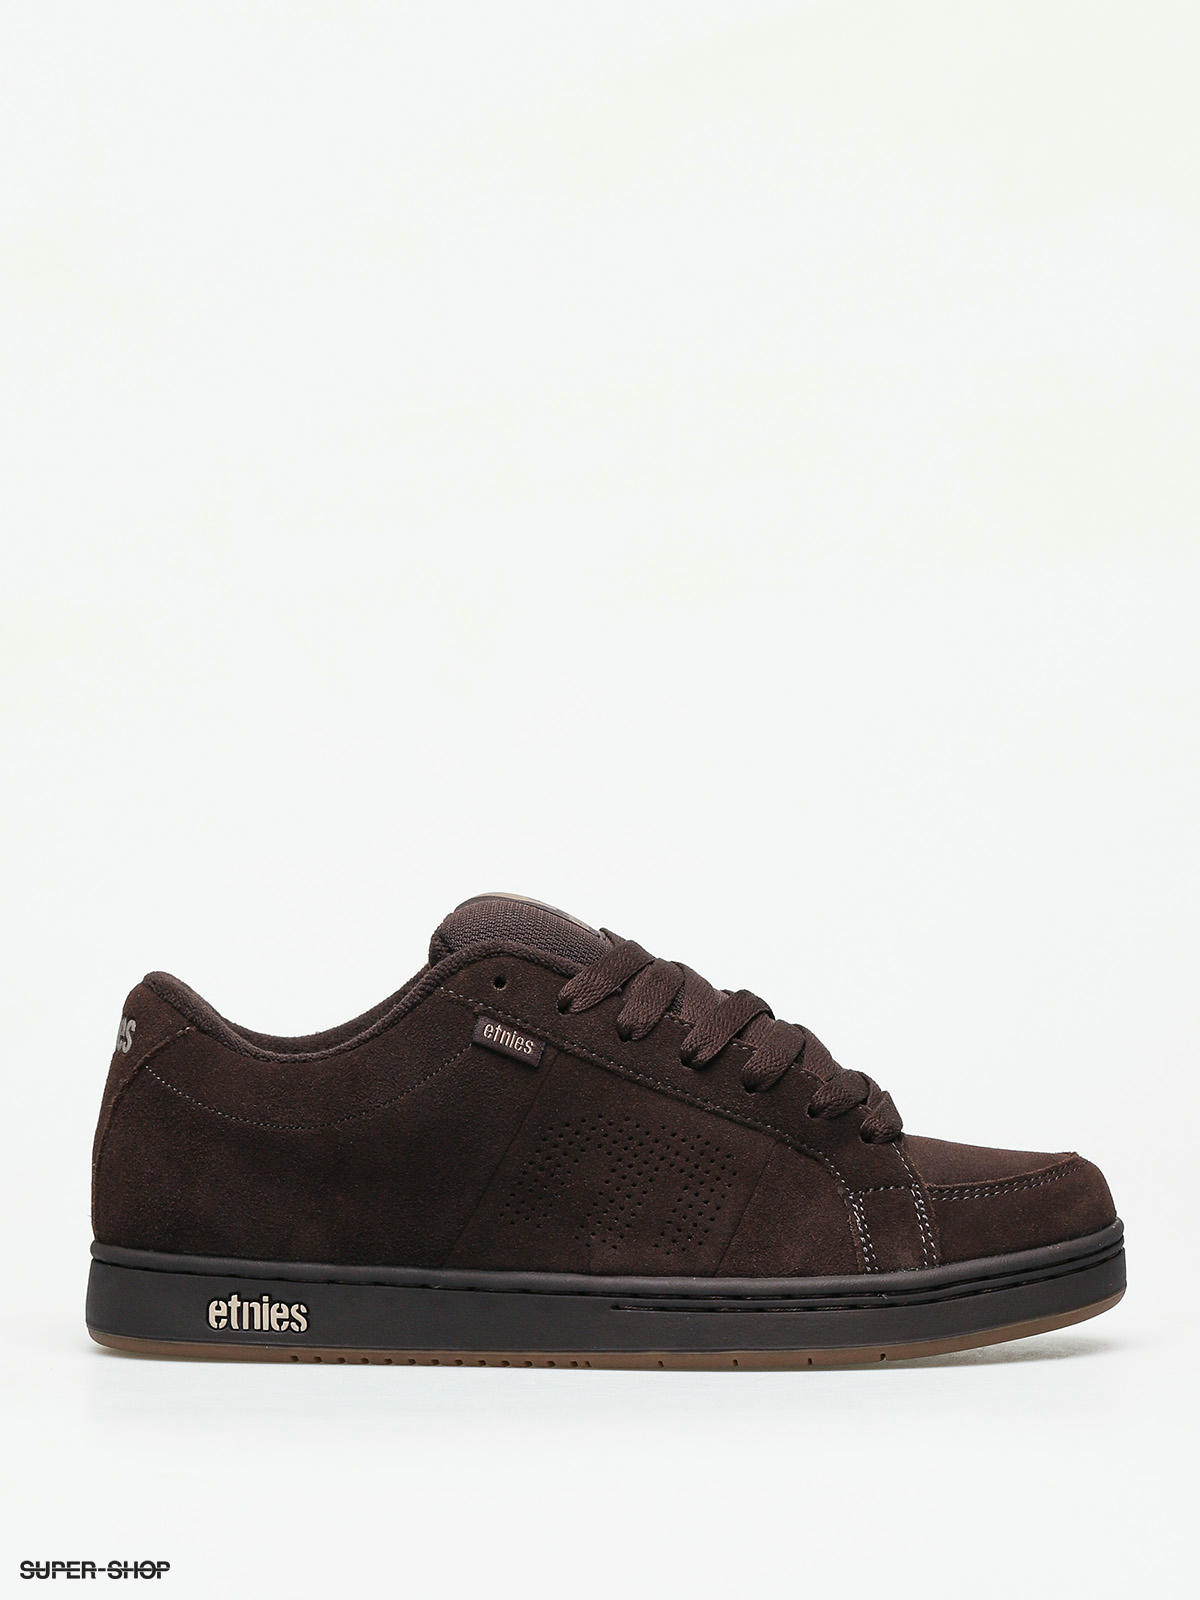 Etnies Kingpin Shoes (brown/black/tan)